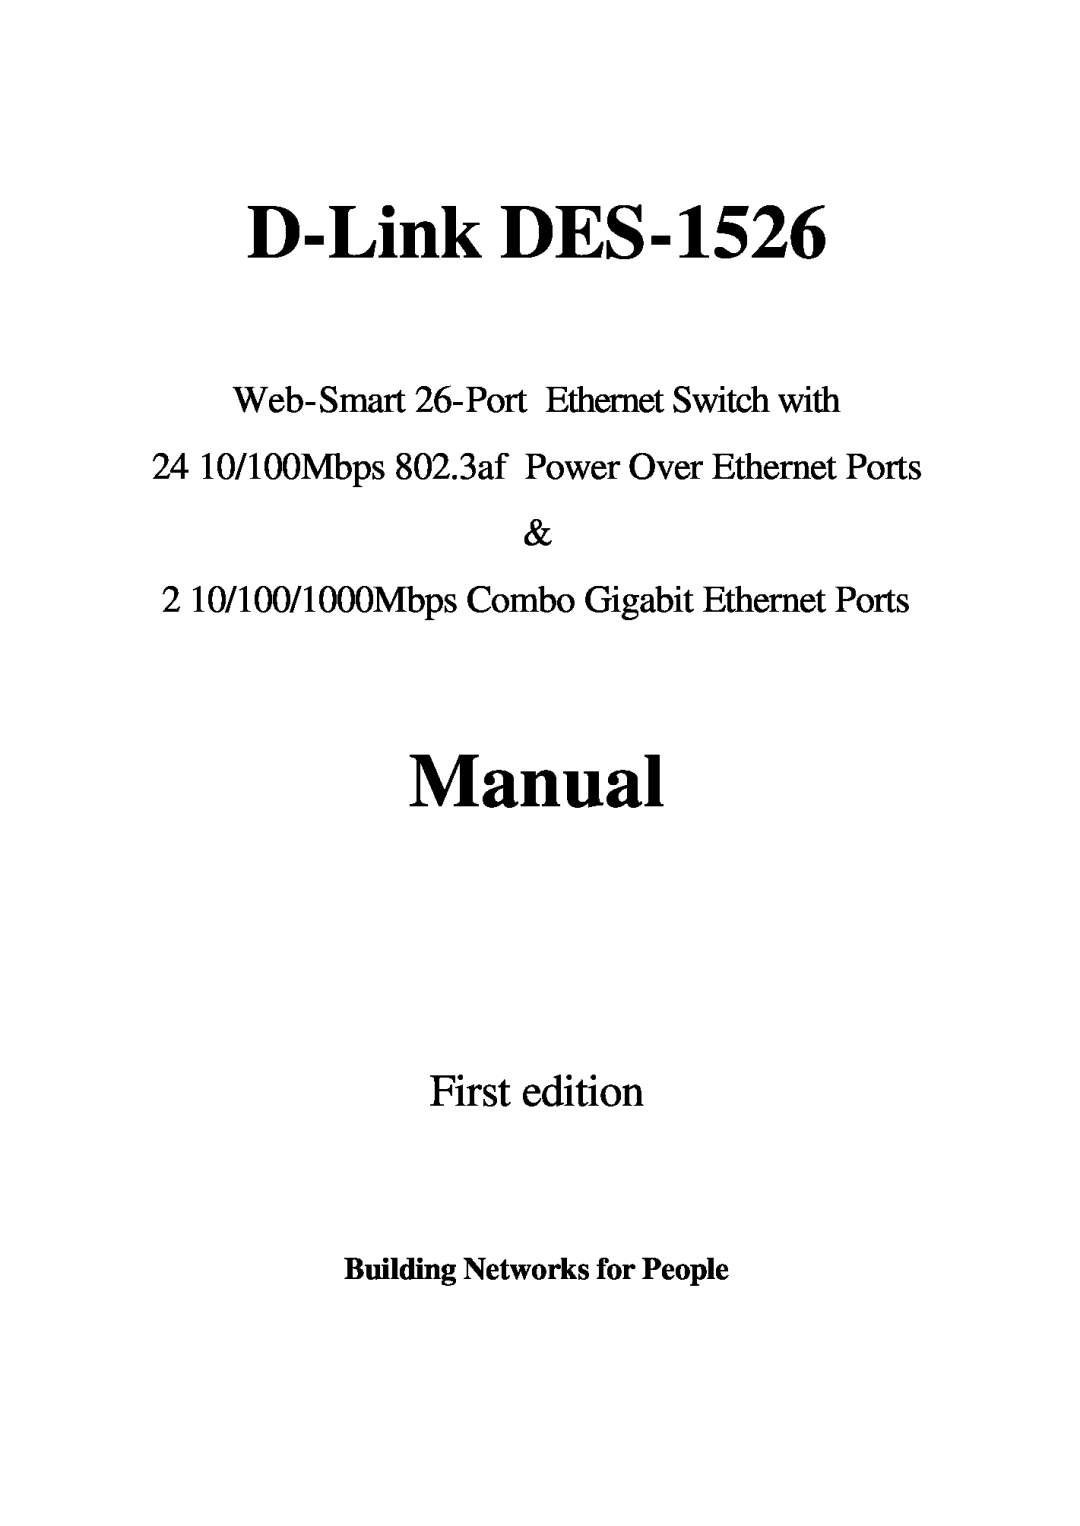 D-Link manual D-Link DES-1526, Manual, First edition, Web-Smart 26-PortEthernet Switch with 